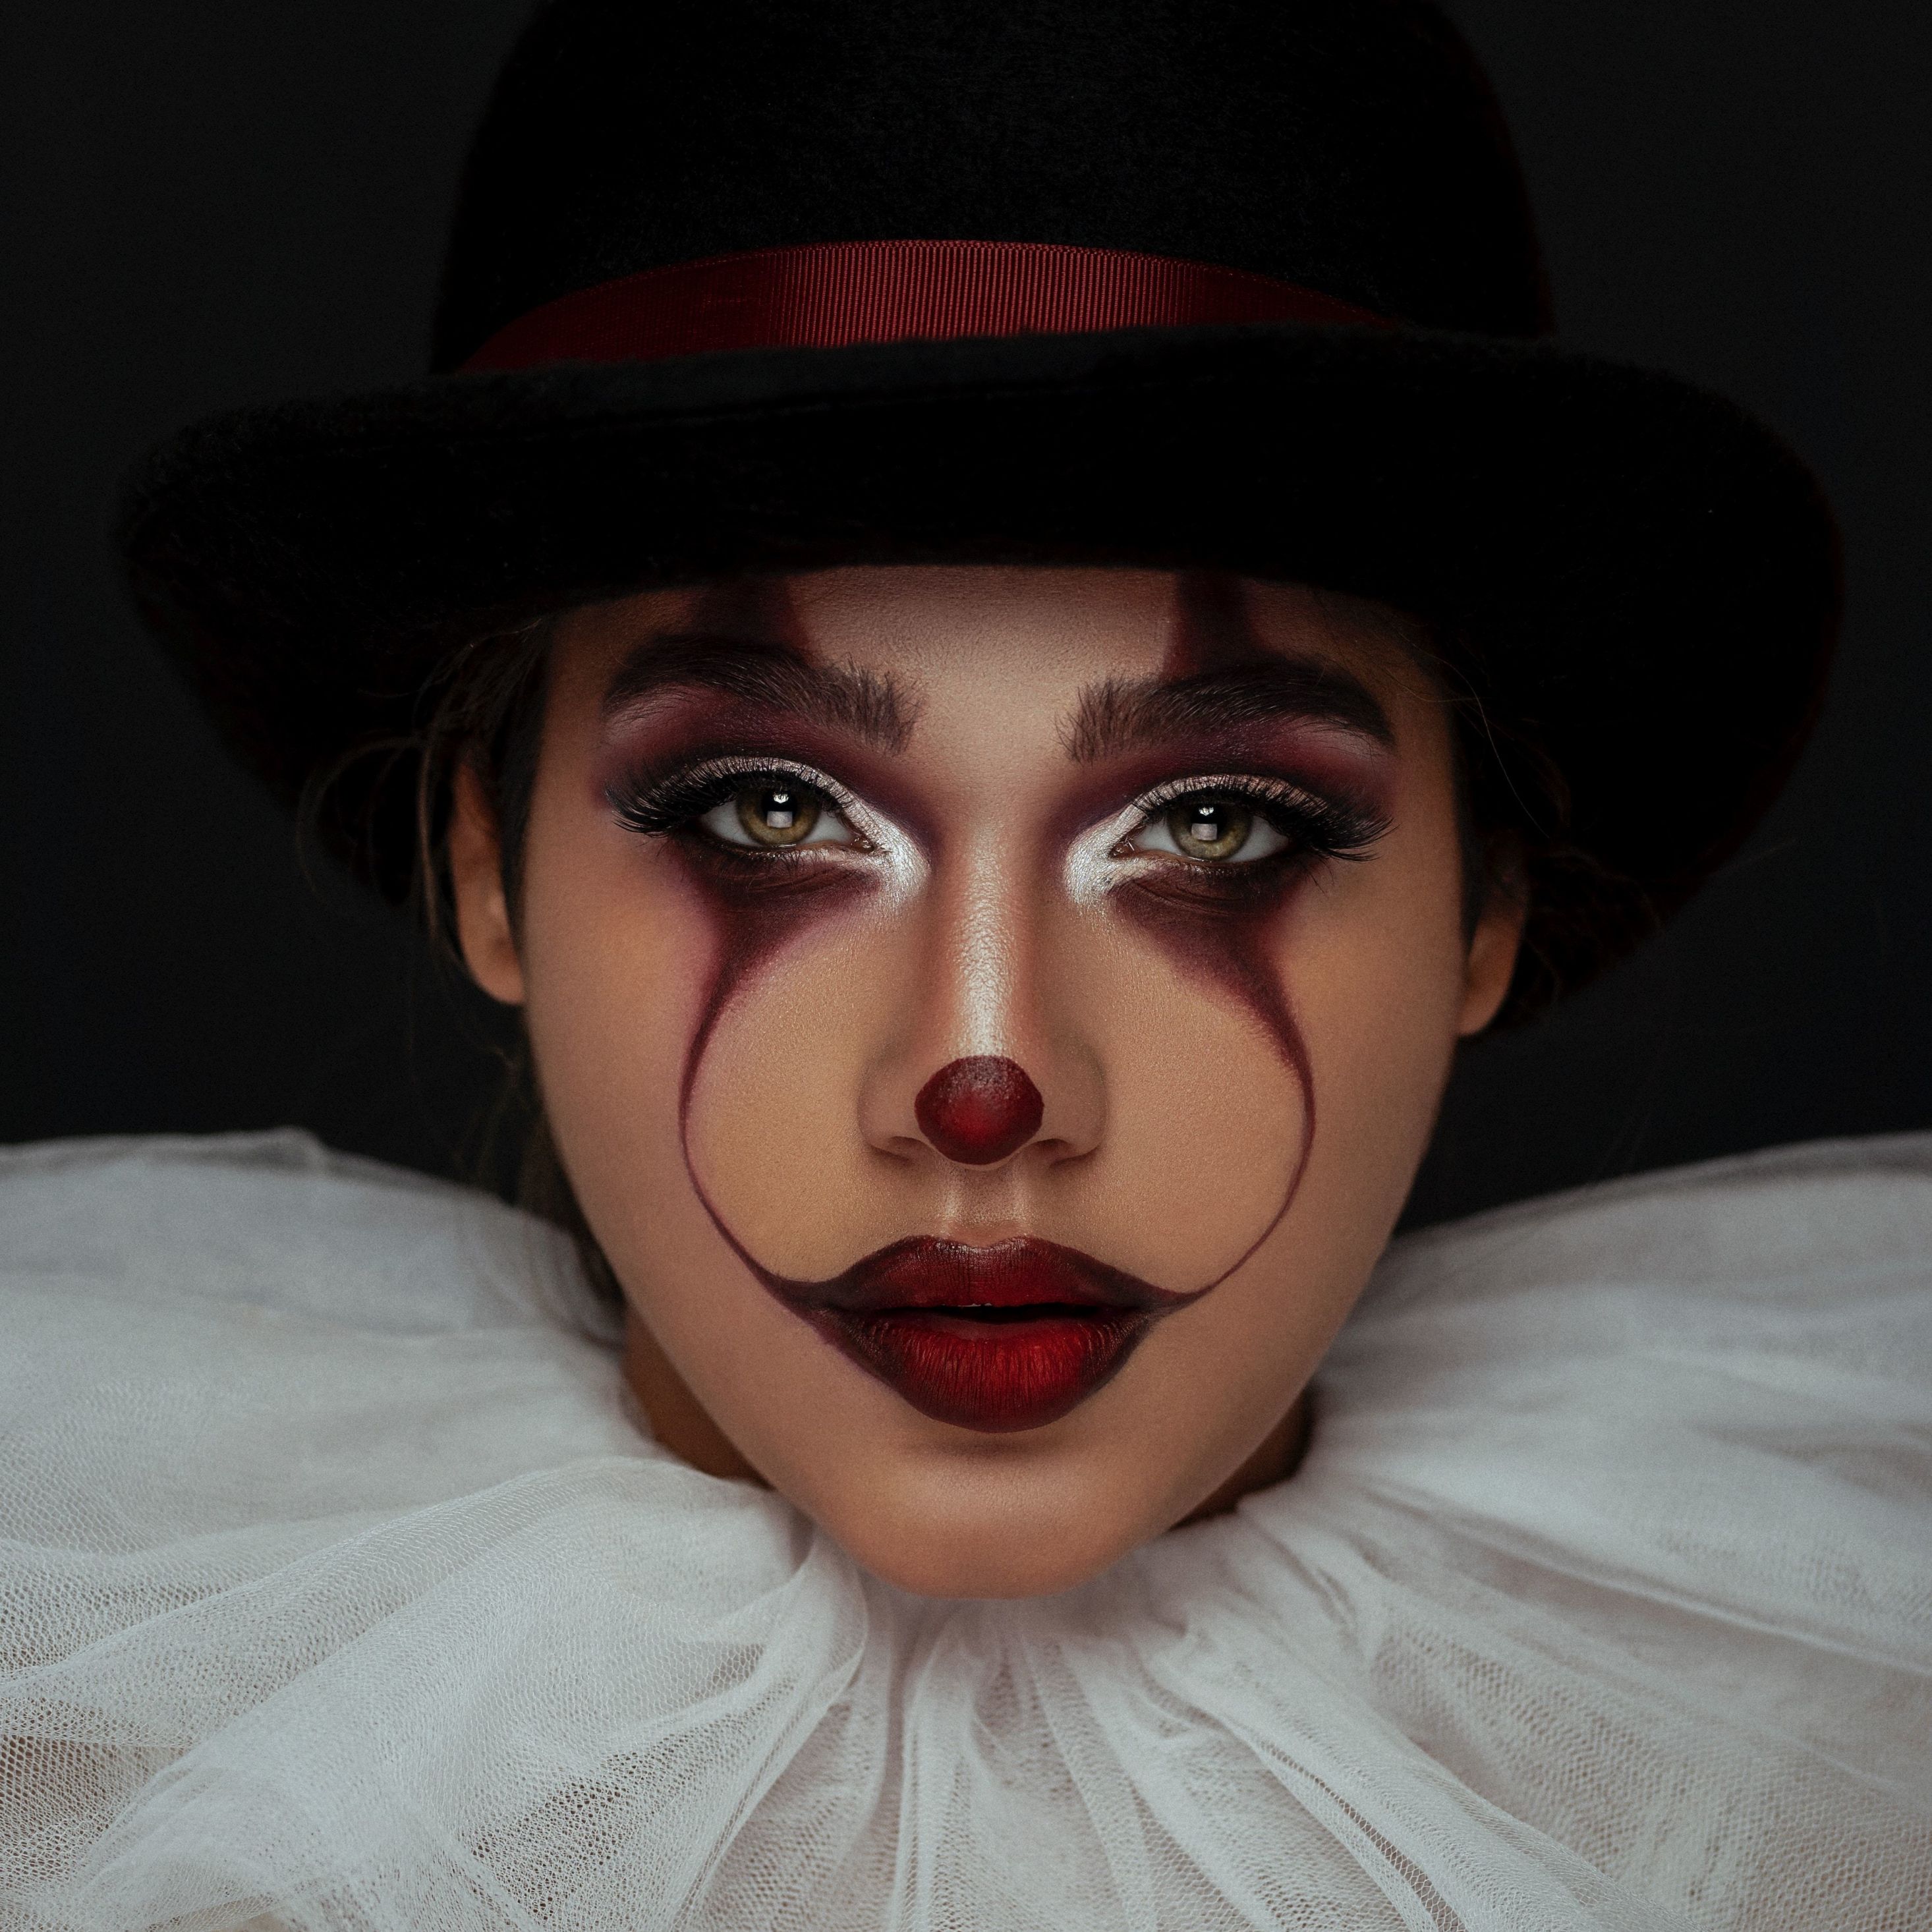 Download 2932x2932 wallpaper woman model, joker, makeup, ipad pro